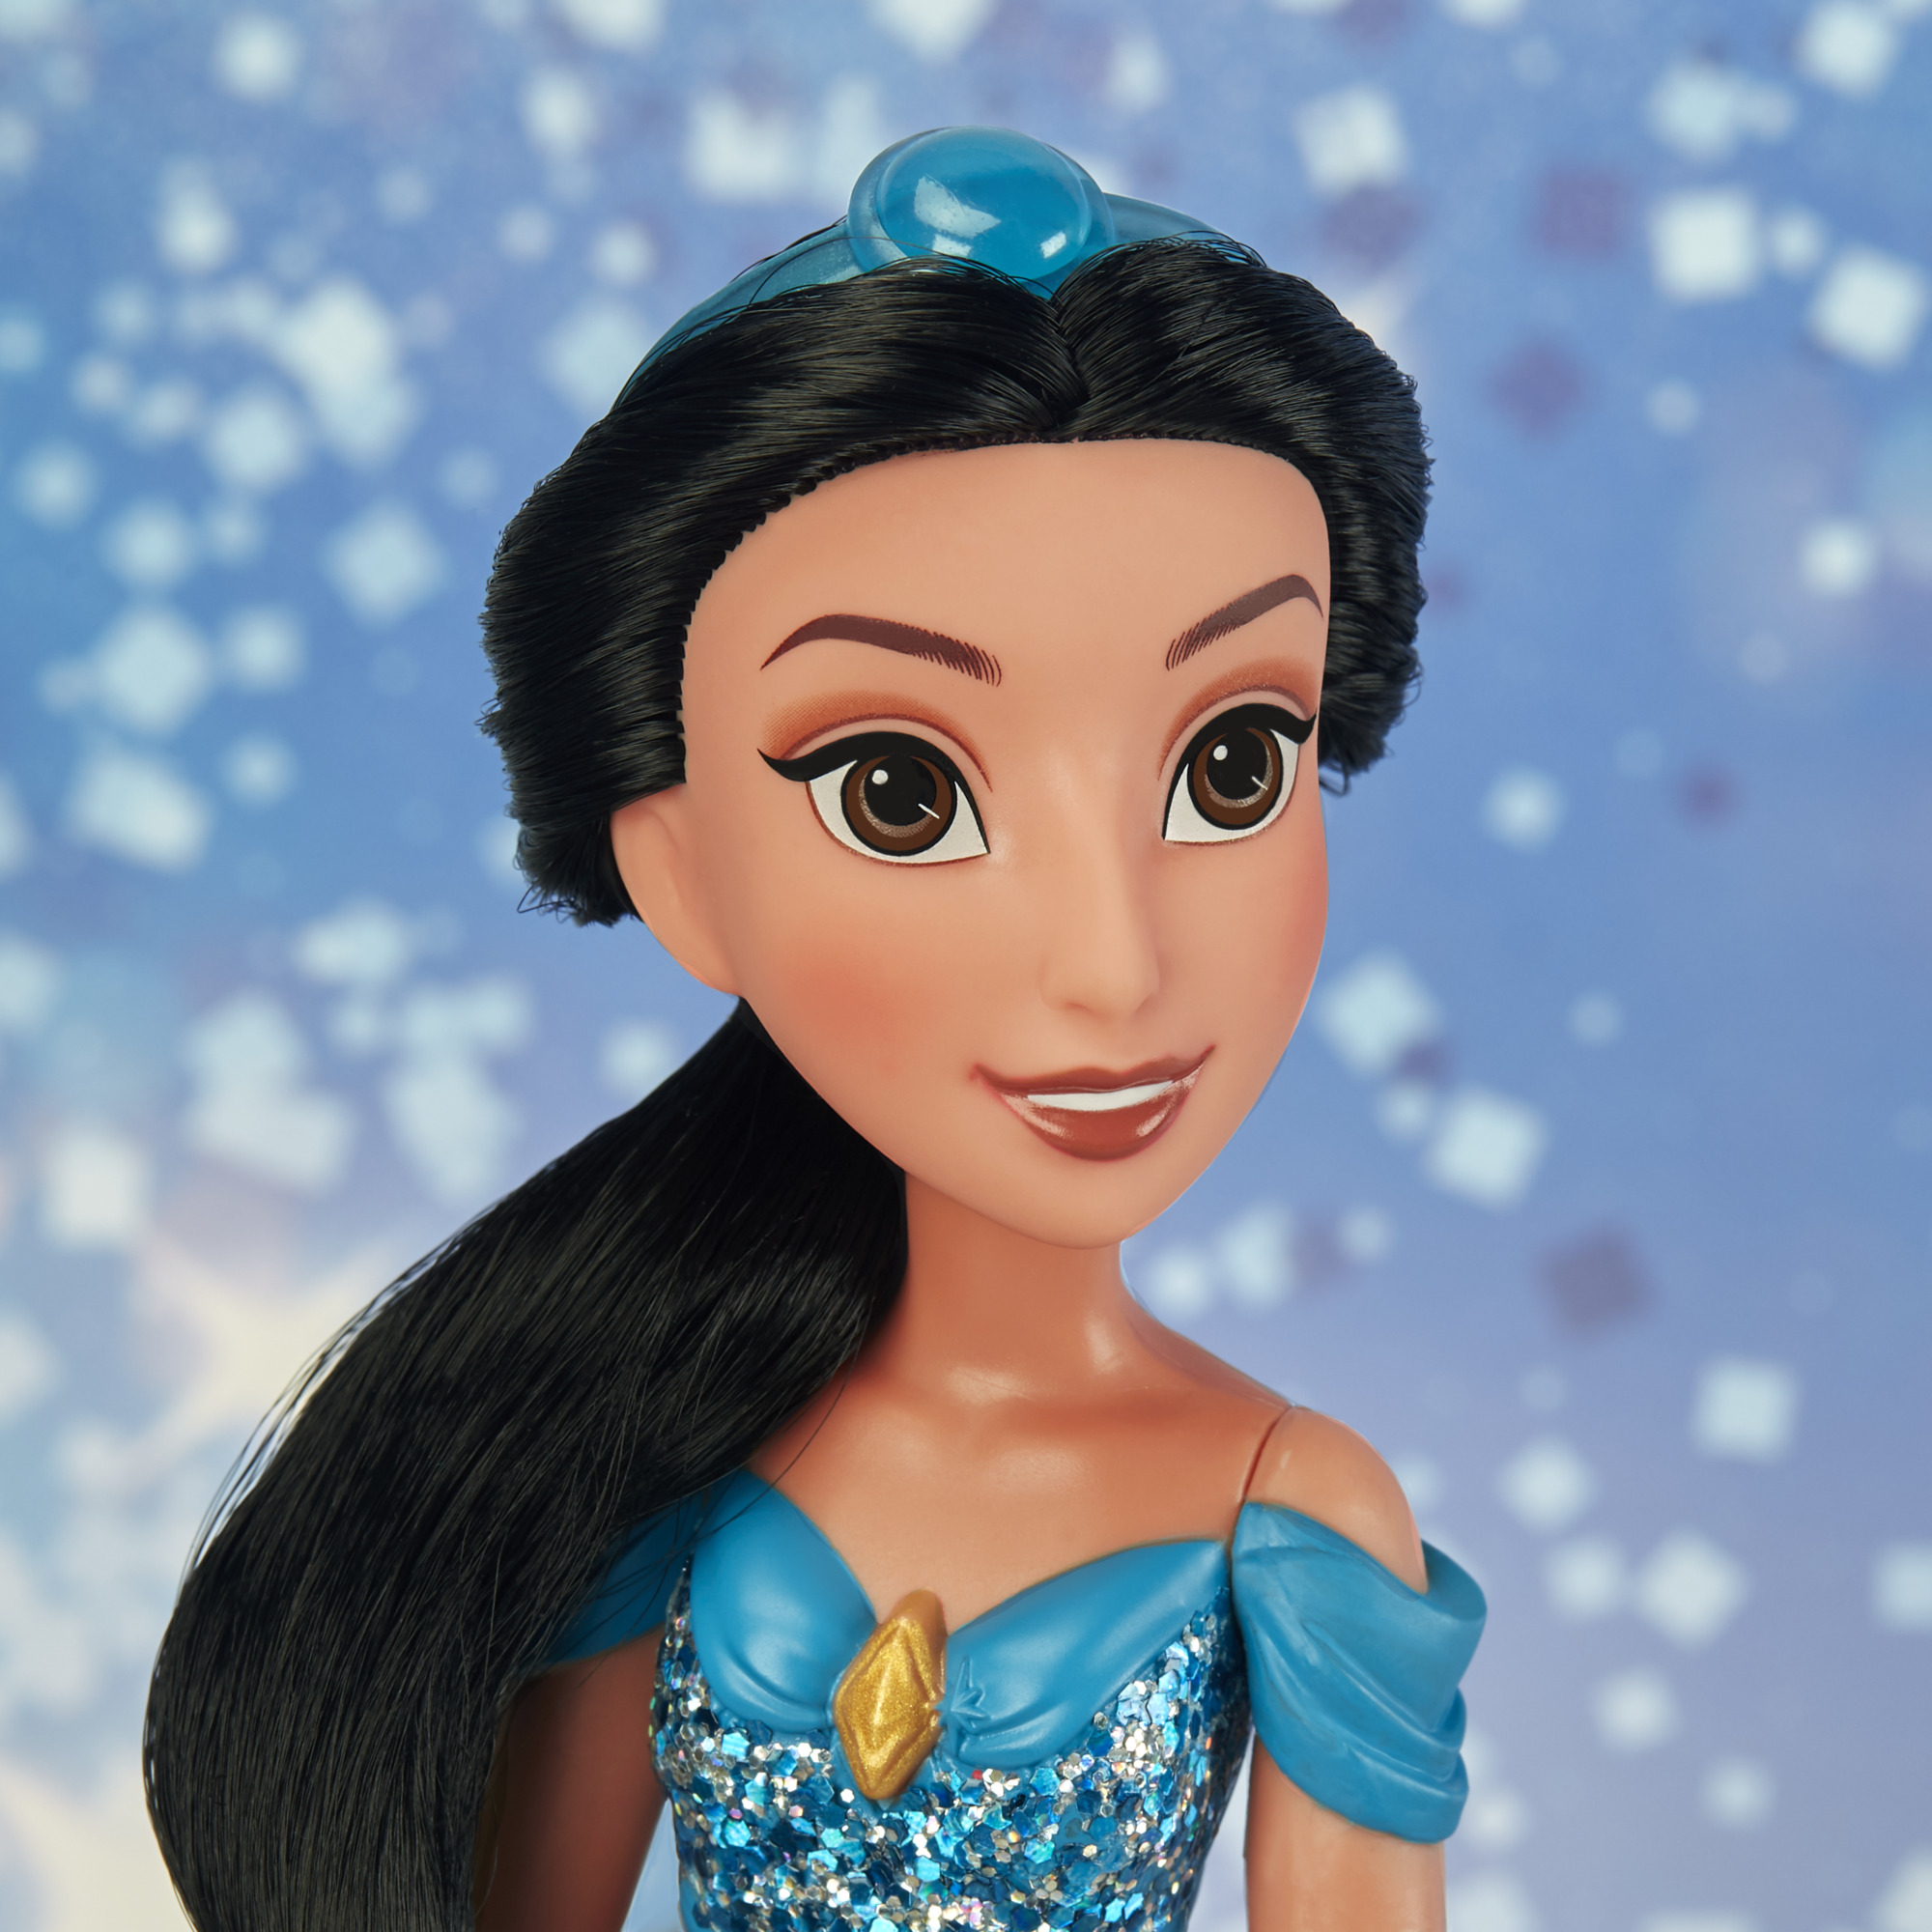 Disney Princess Royal Shimmer Jasmine - image 4 of 8